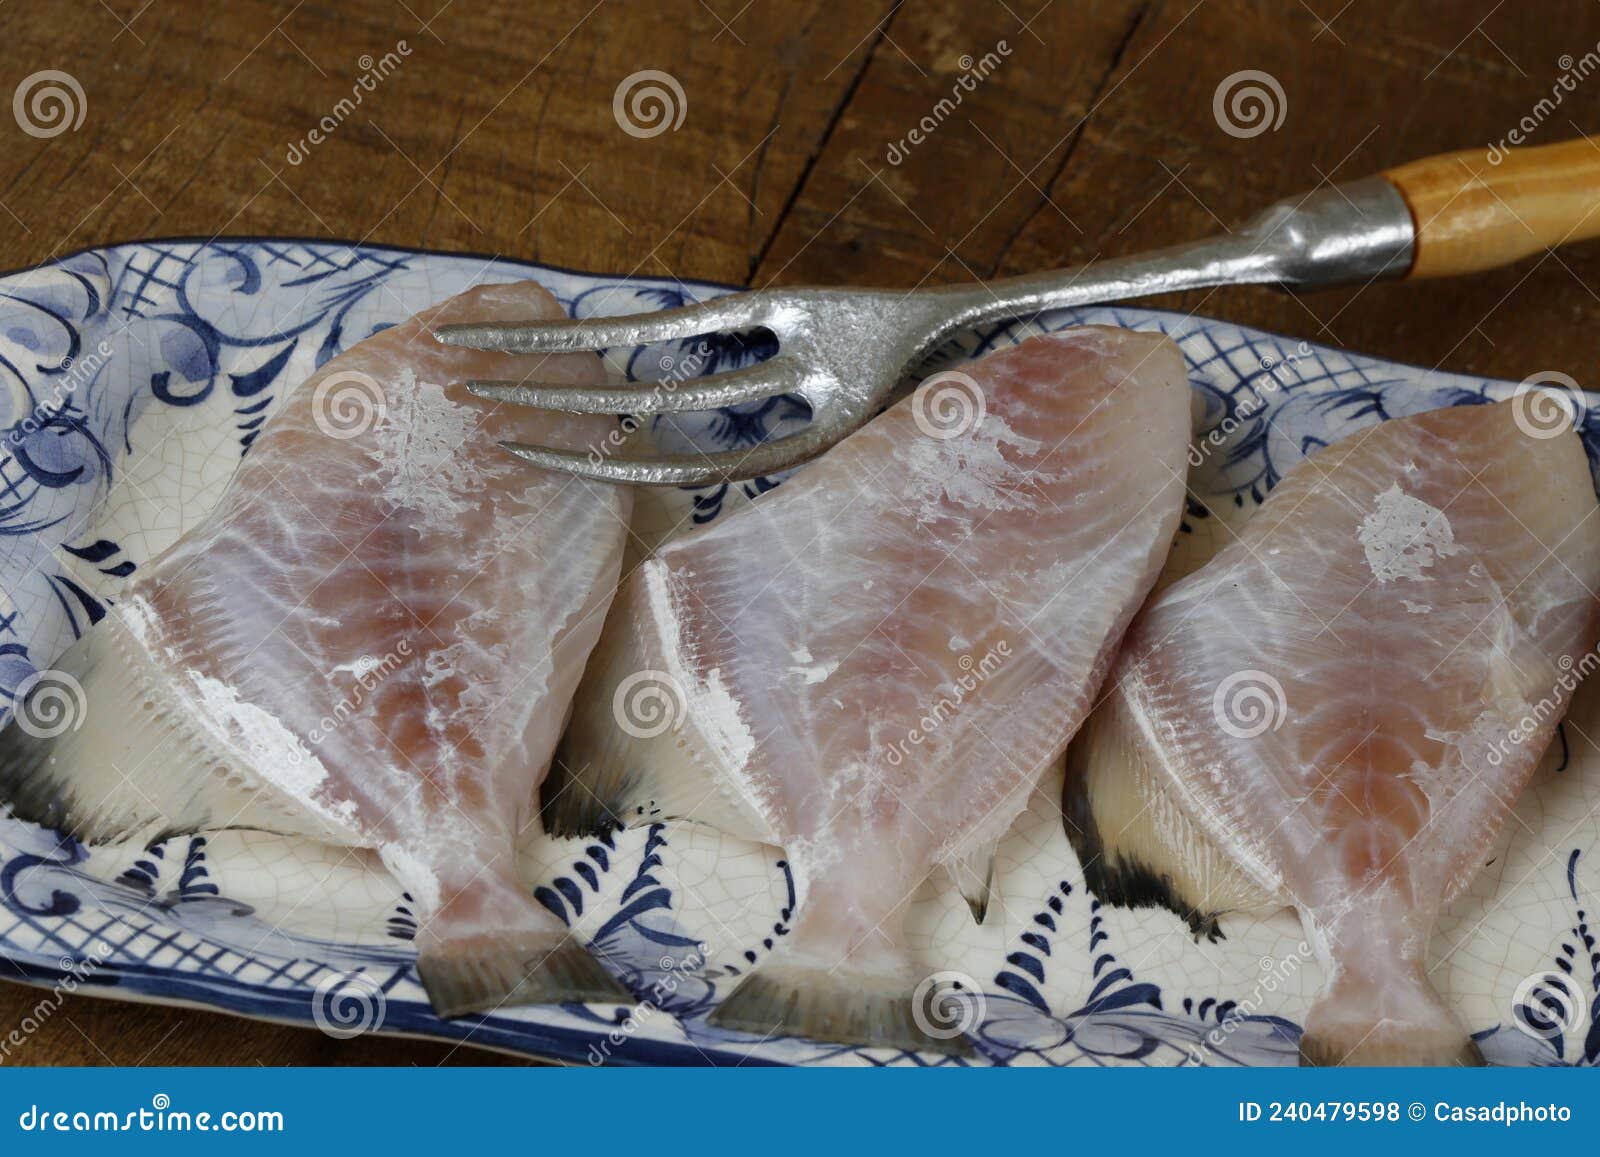 gray triggerfish, or porquinho in portuguese, on dishware